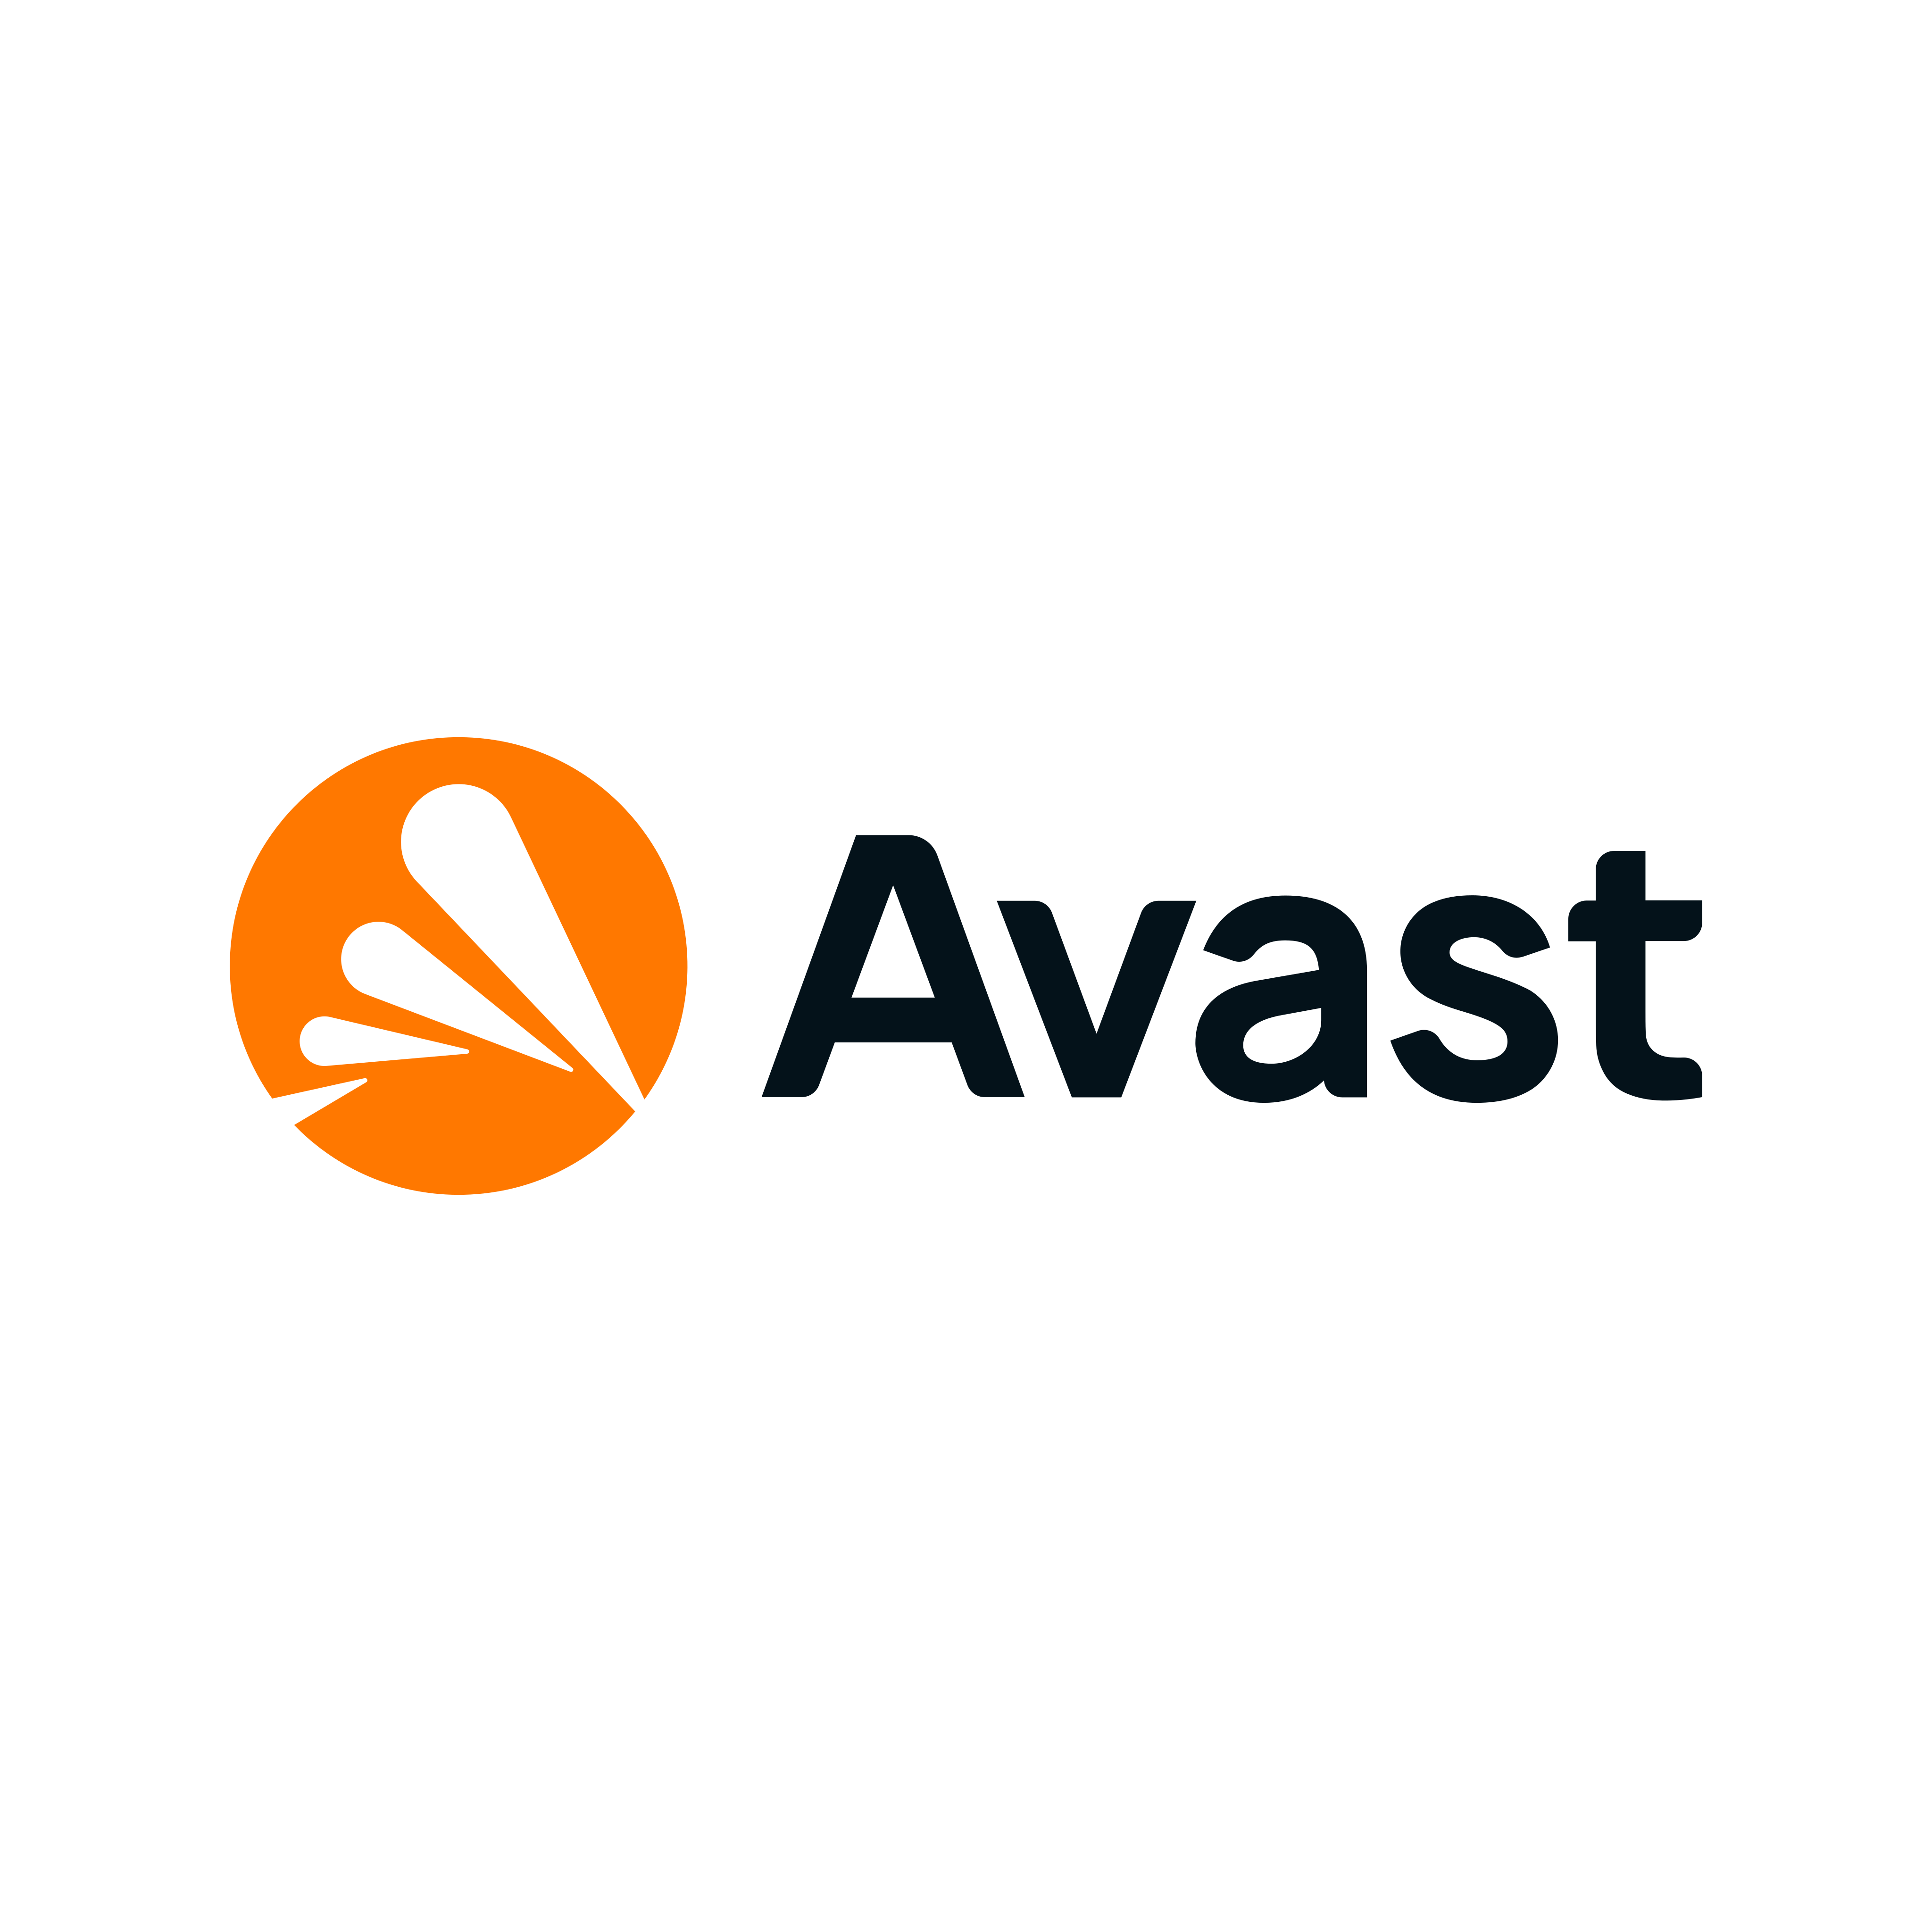 avast logo 0 - Avast Logo